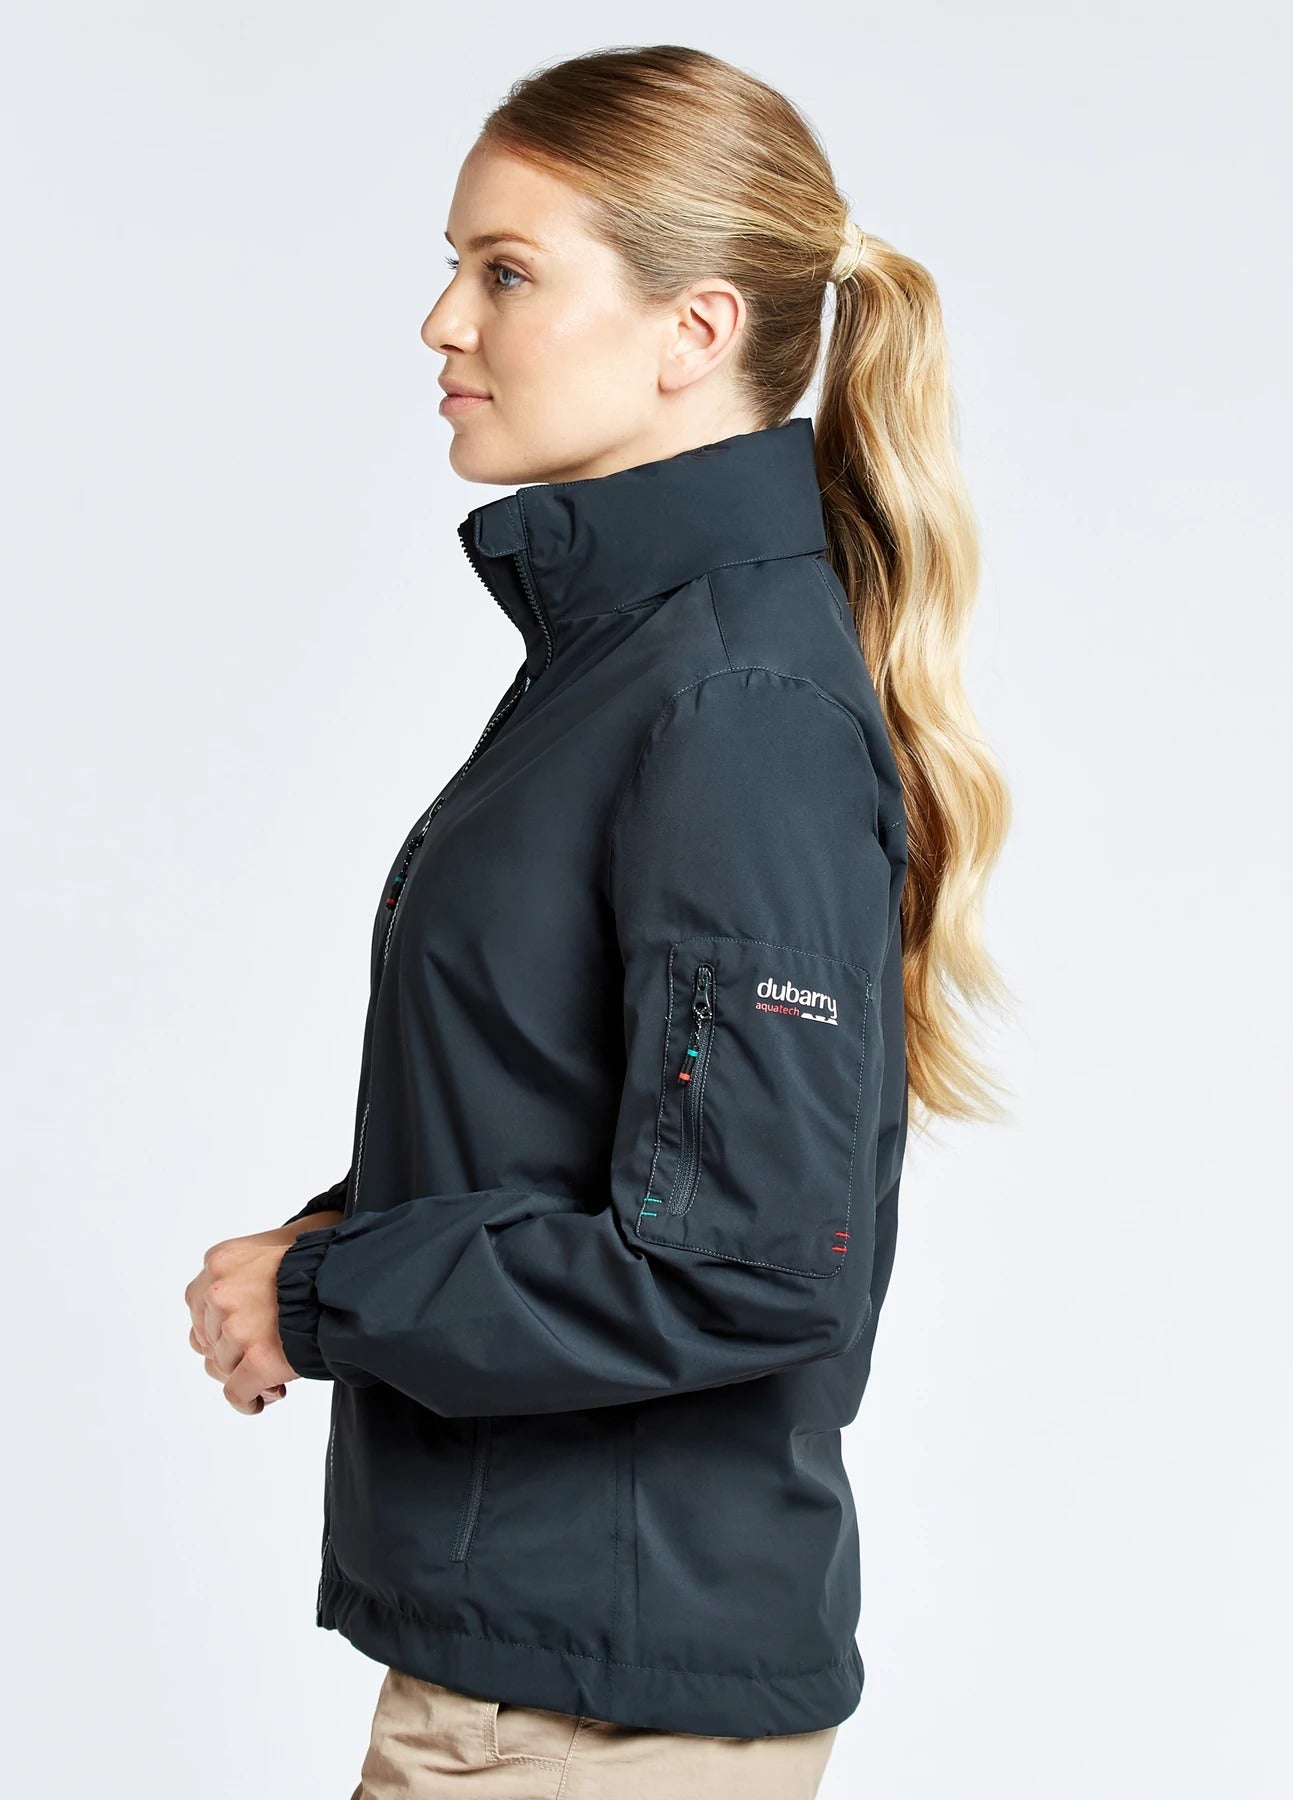 Livorno Women's Fleece-lined Crew Jacket Platinum